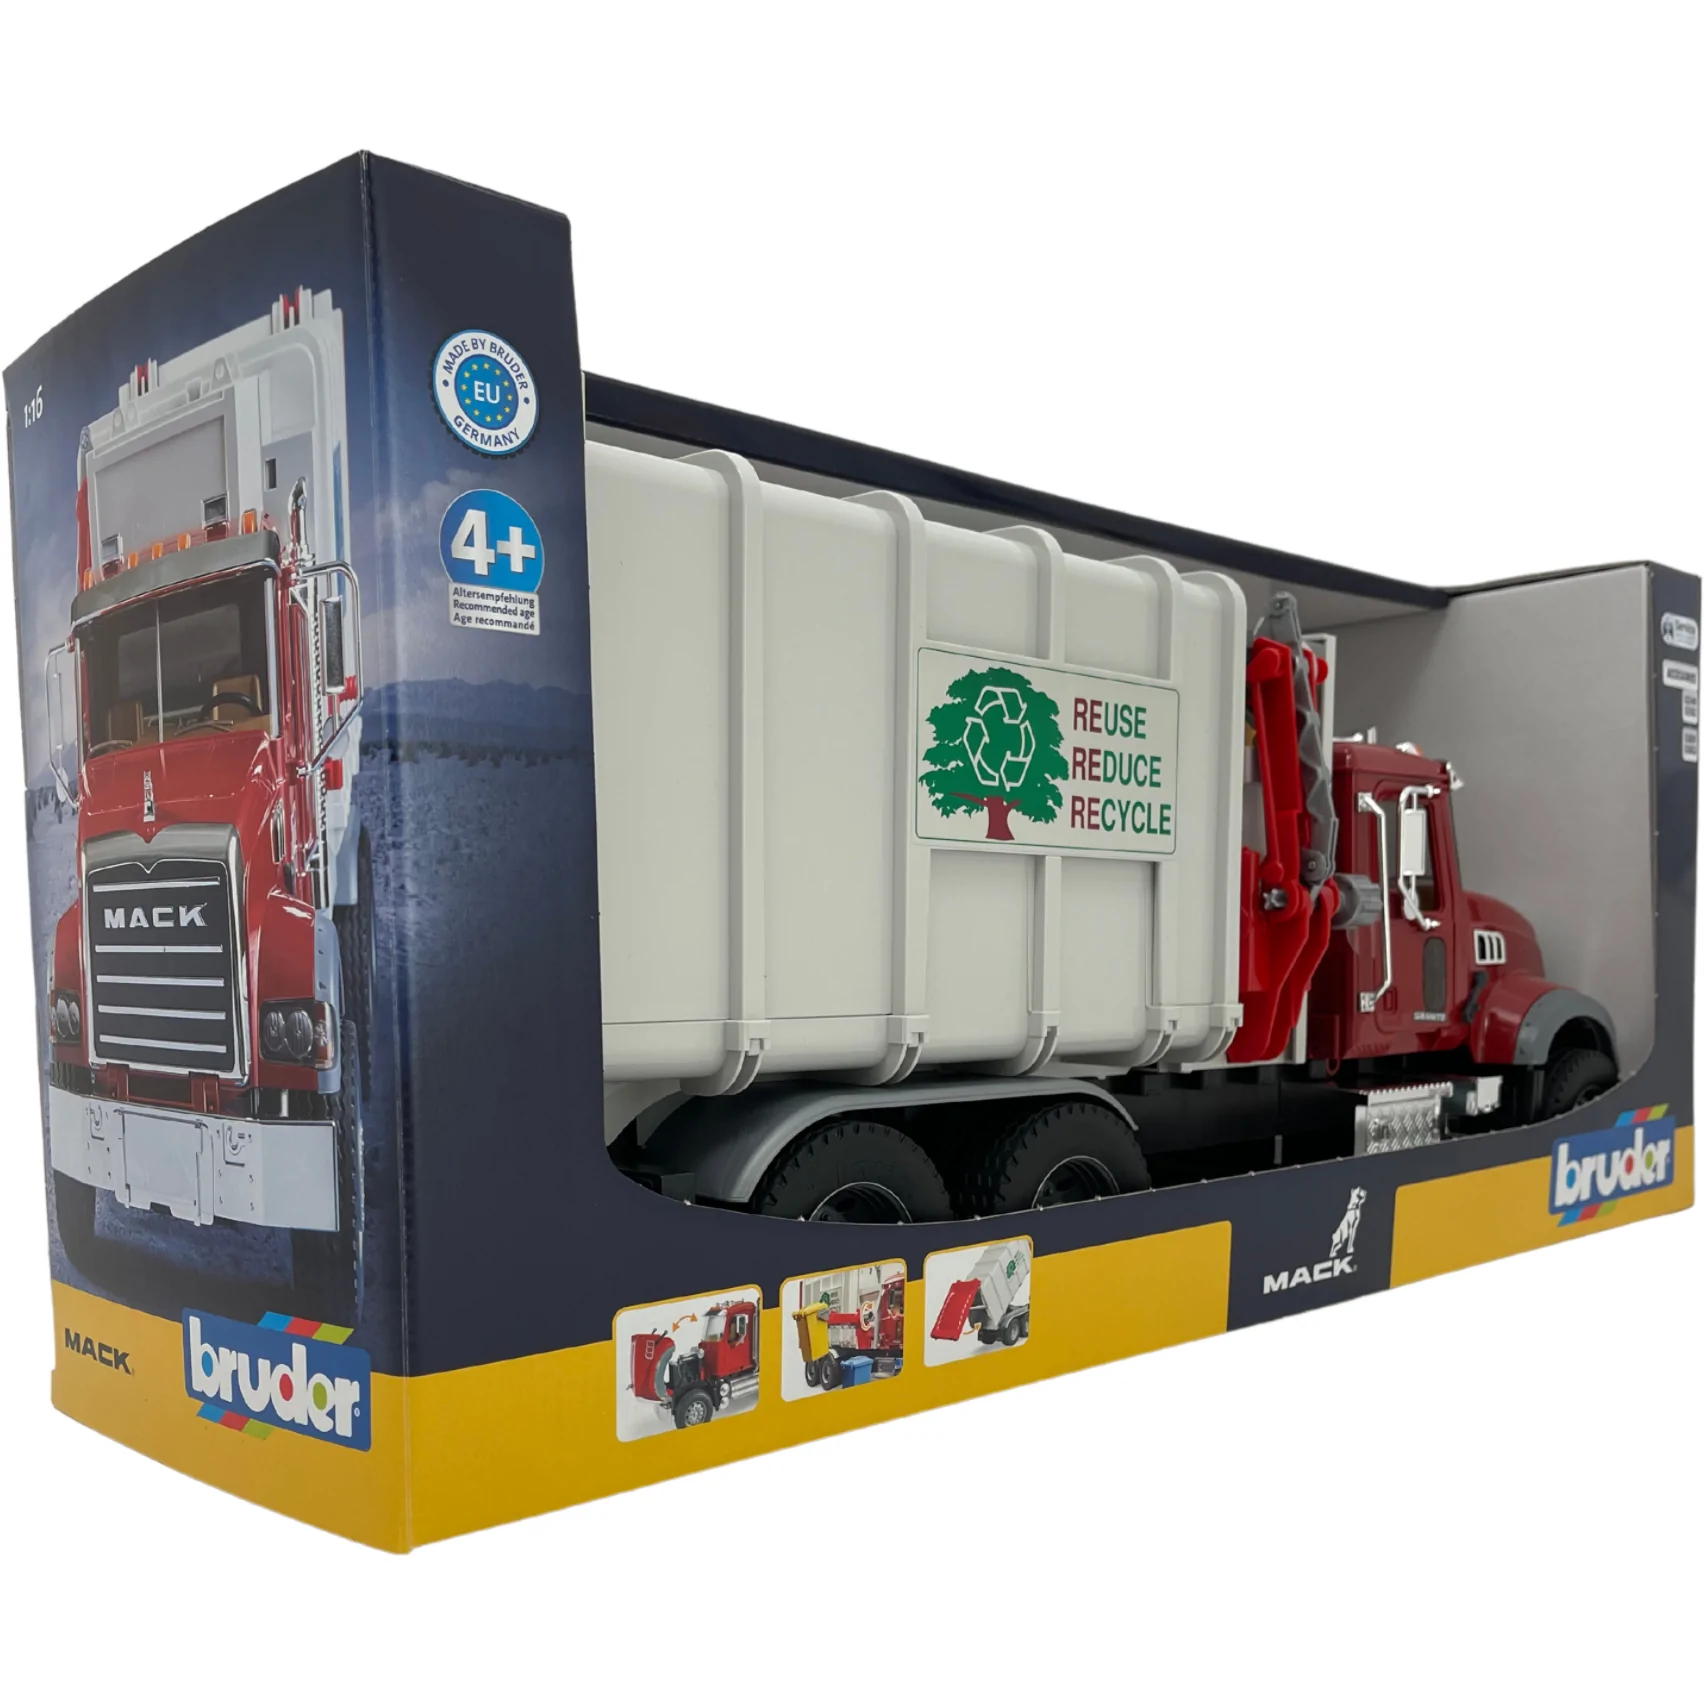 Bruder MACK Garbage Truck Toy / MACK Granite Garbage Truck & Loader / Environmental Service Toy / Red and Grey